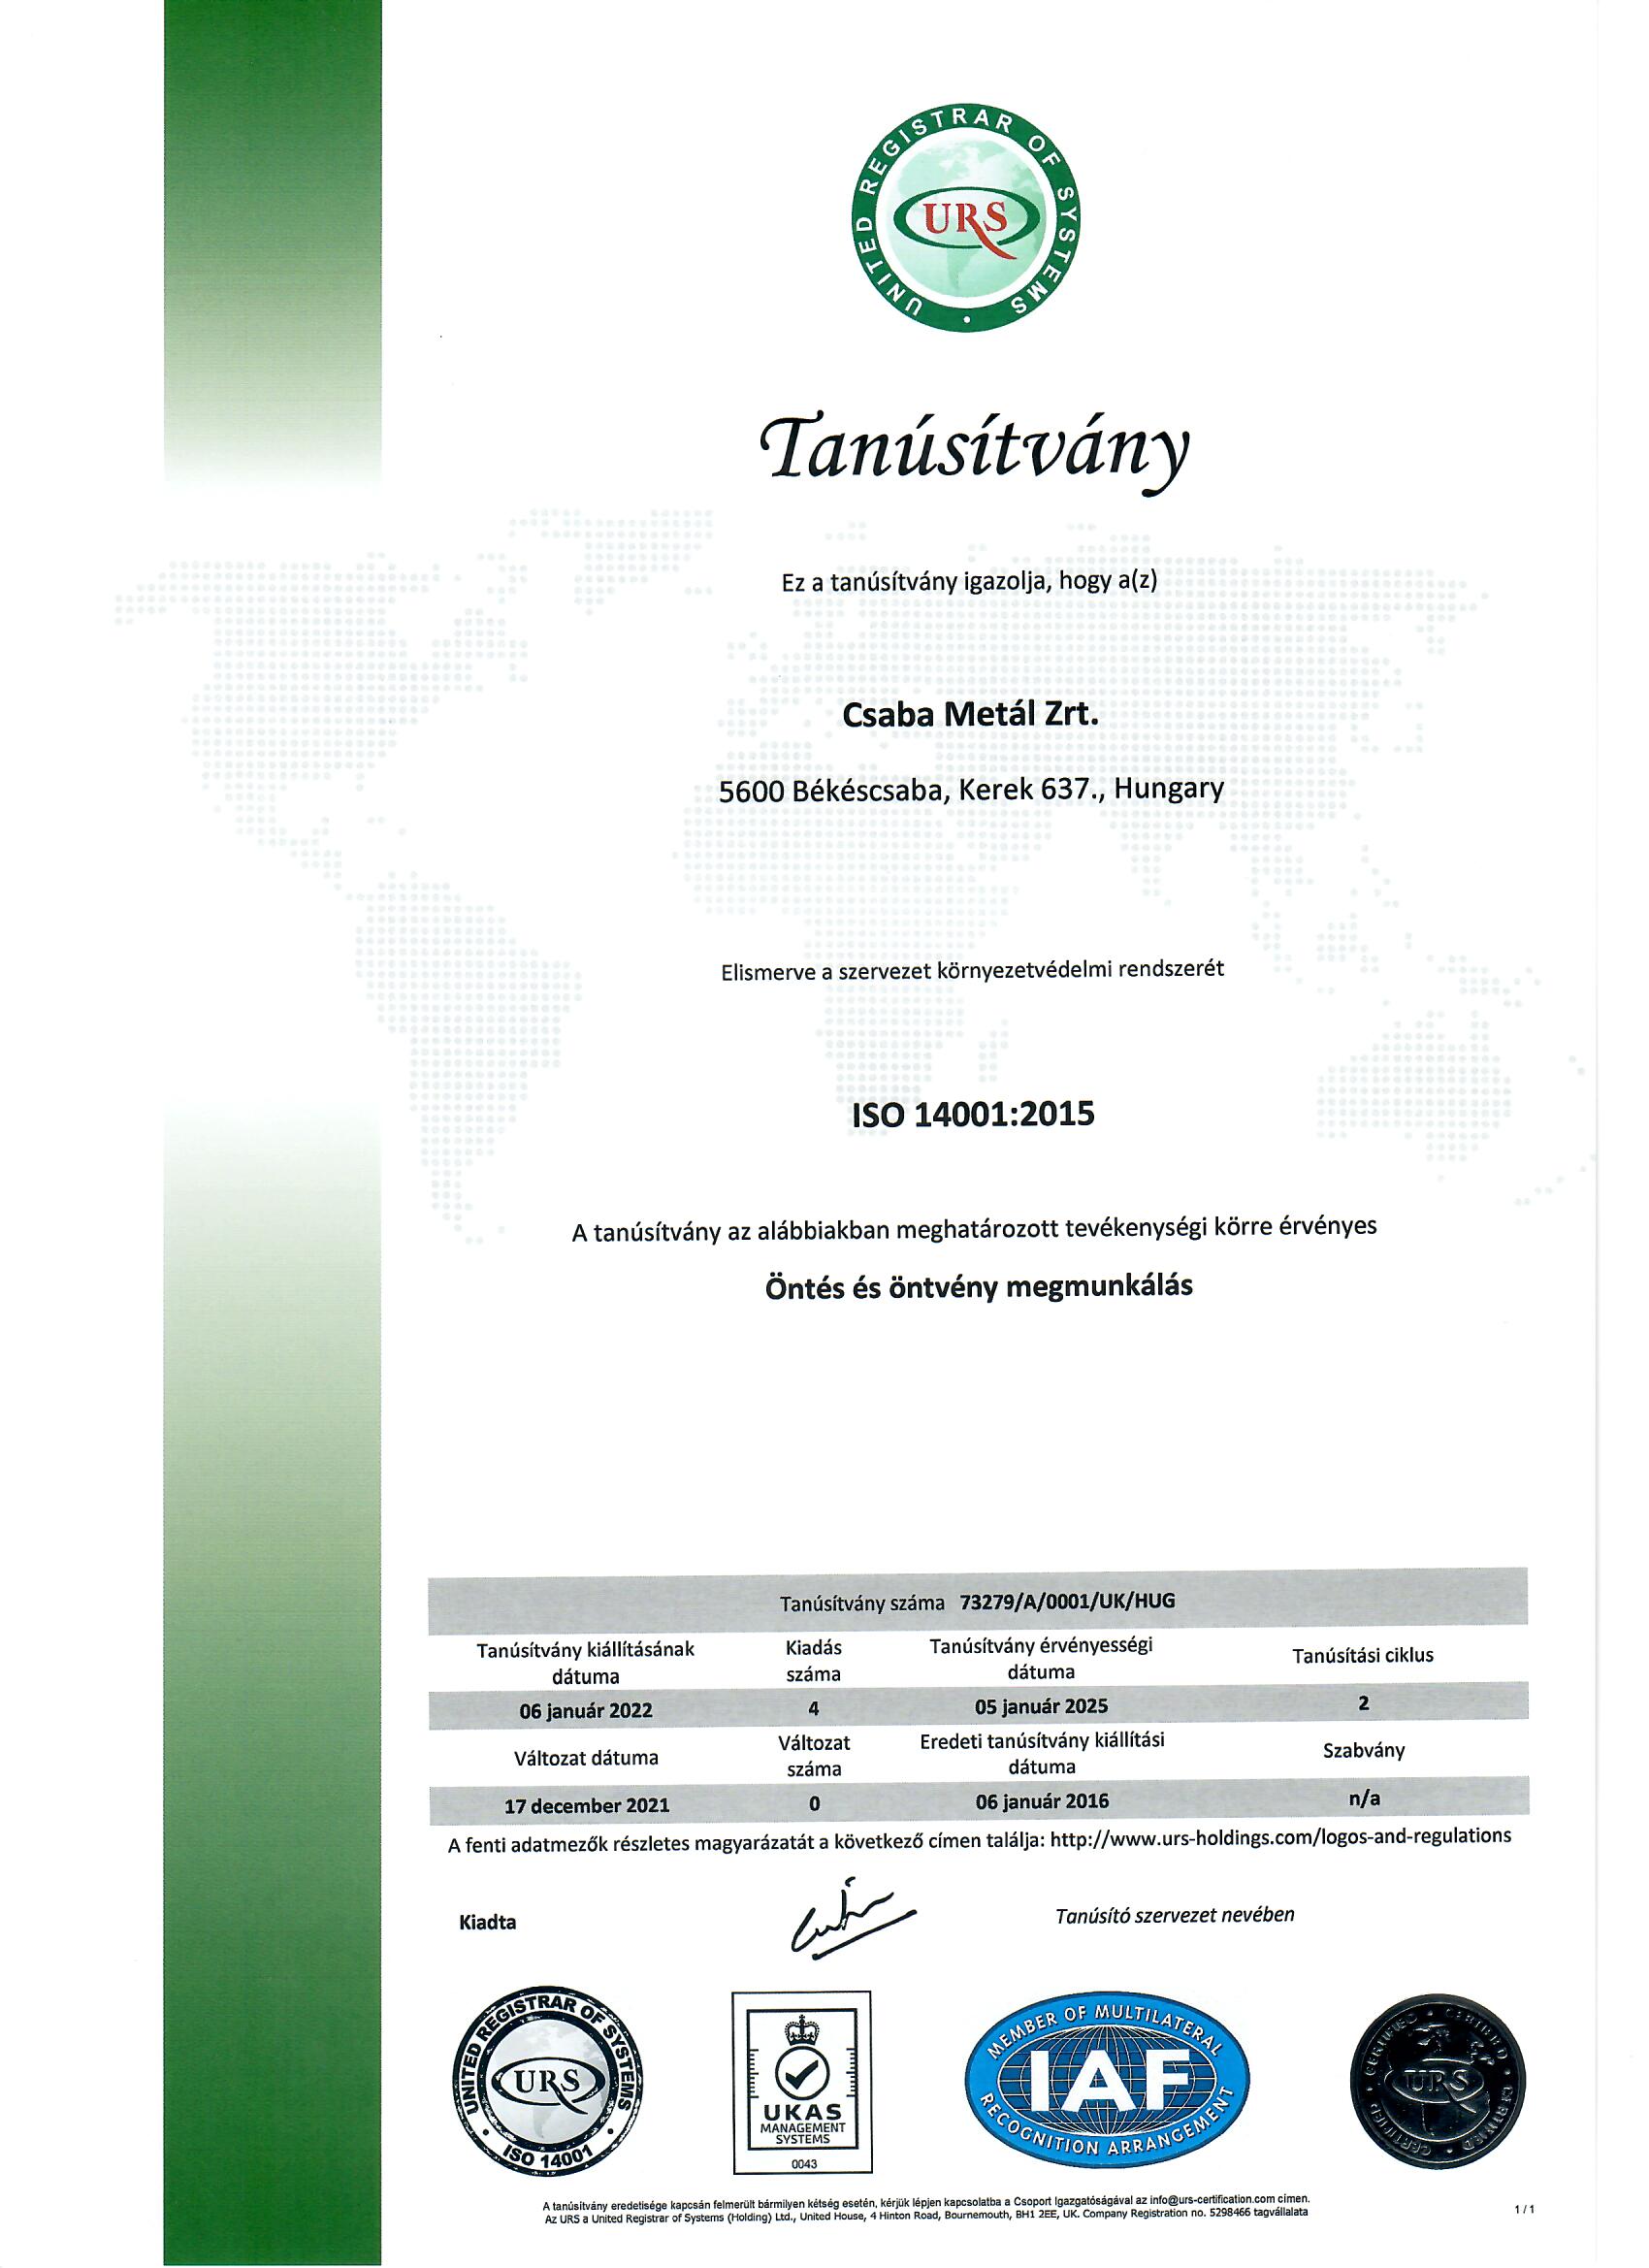 Csaba Metal Zrt ISO 14001 HUN cert-0